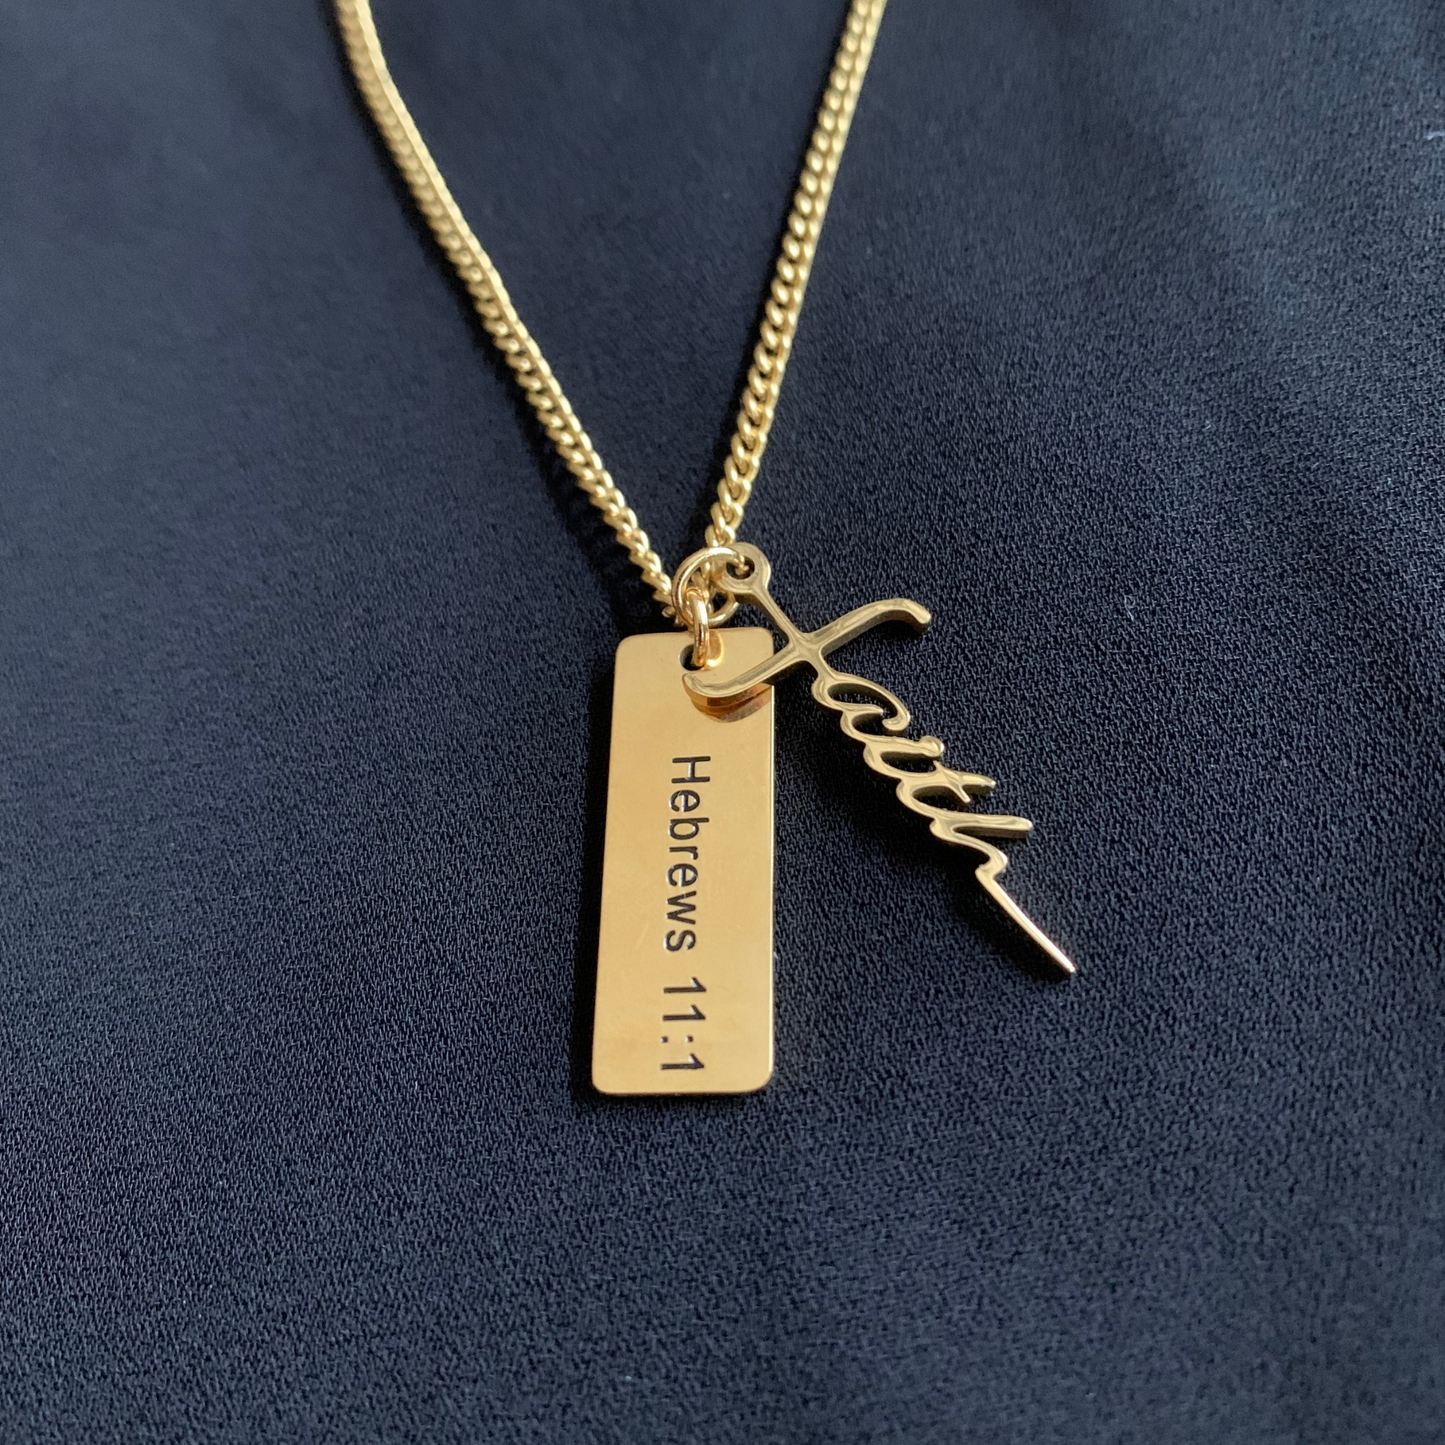 Faith Cross Necklace with verse pendant